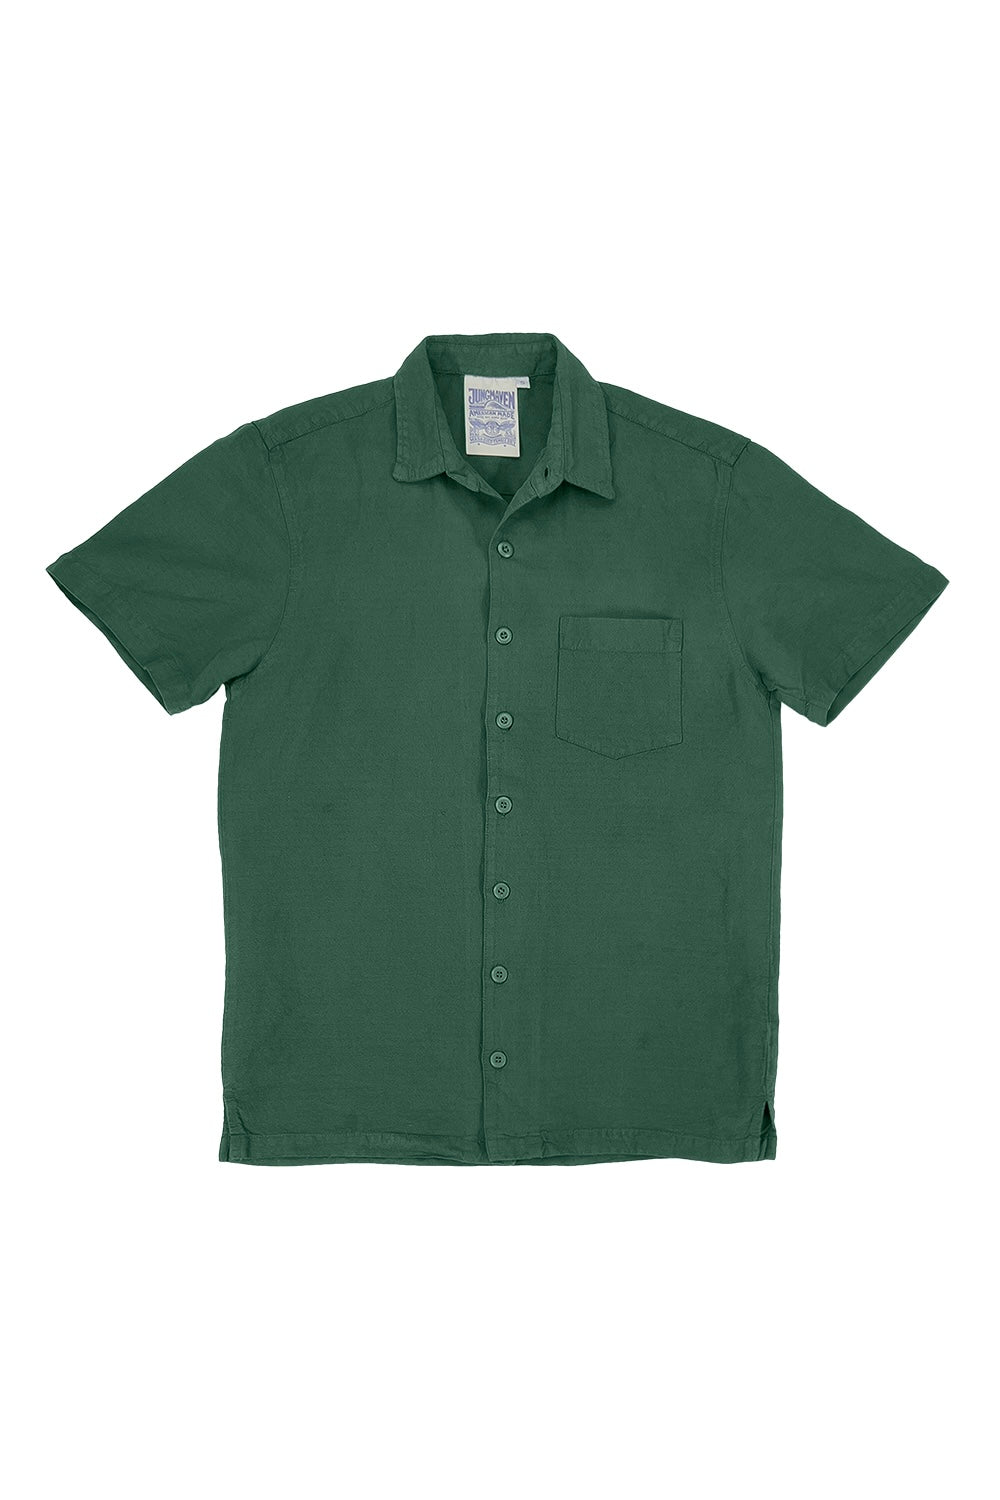 Rincon Shirt | Jungmaven Hemp Clothing & Accessories / Color: Hunter Green